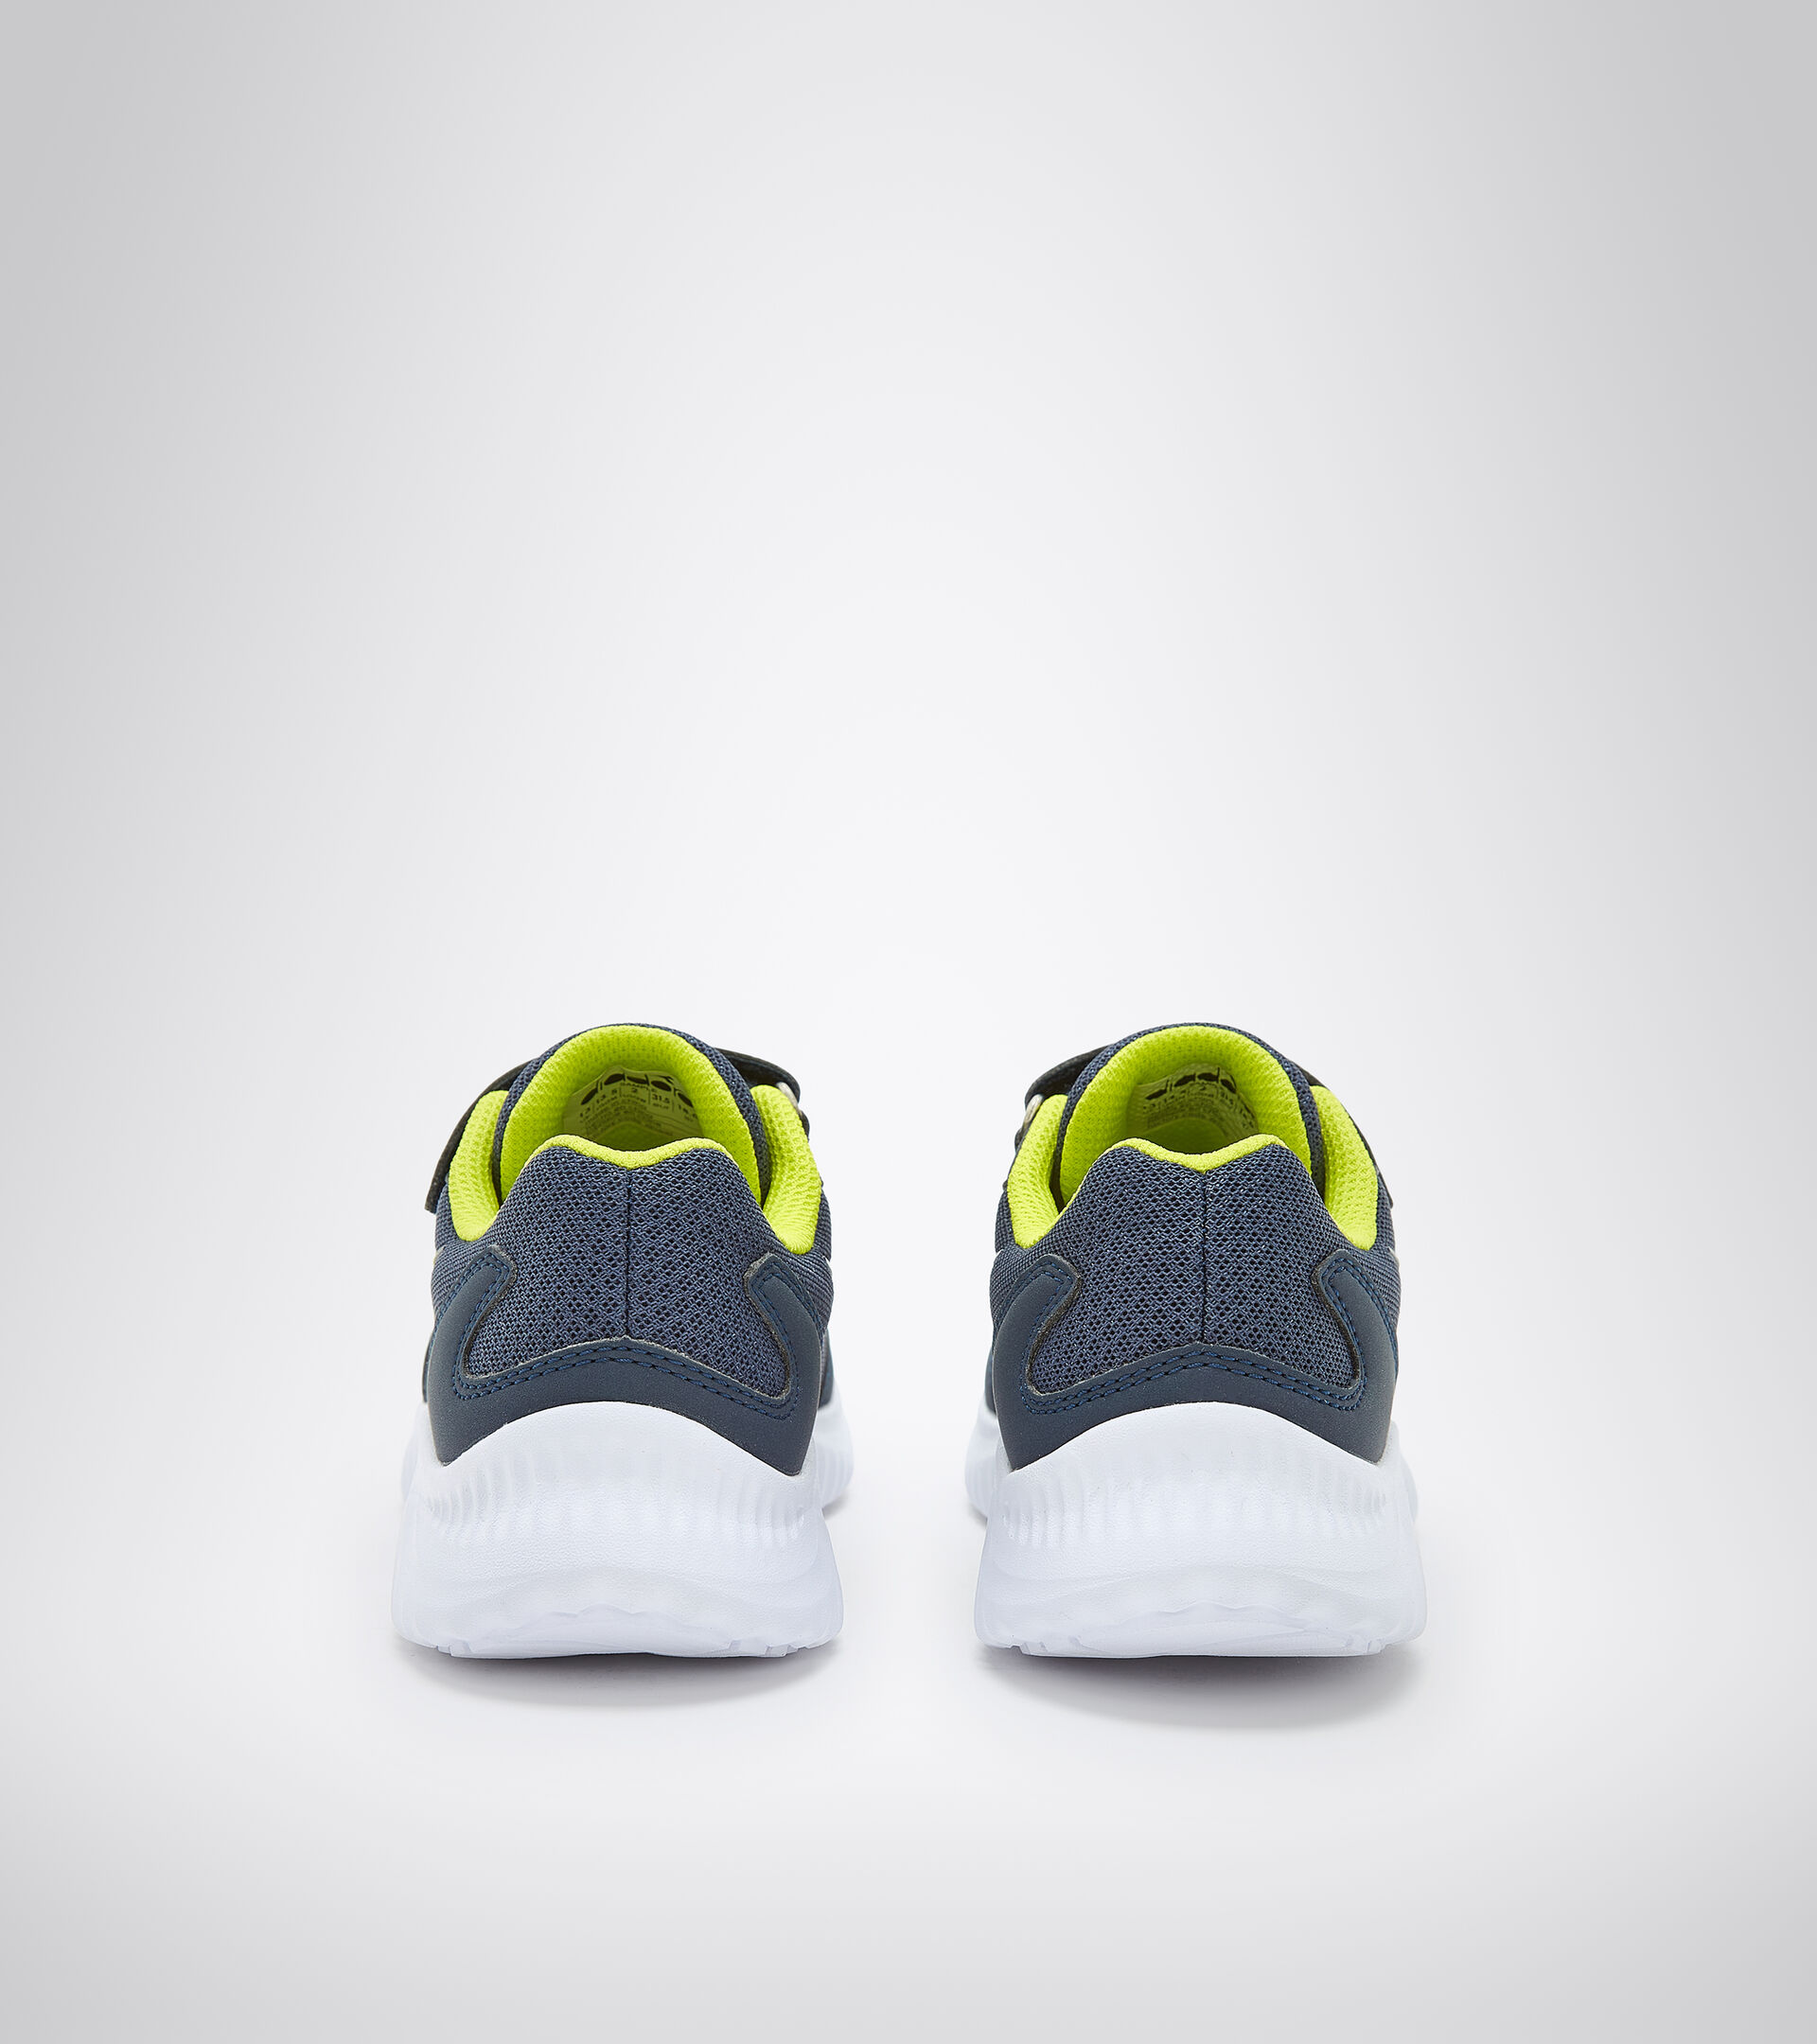 Chaussures de running Junior avec Velcro®- Unisexe ROBIN 3 JR V NOIR IRIS/SOURCES SULFUREUSES - Diadora